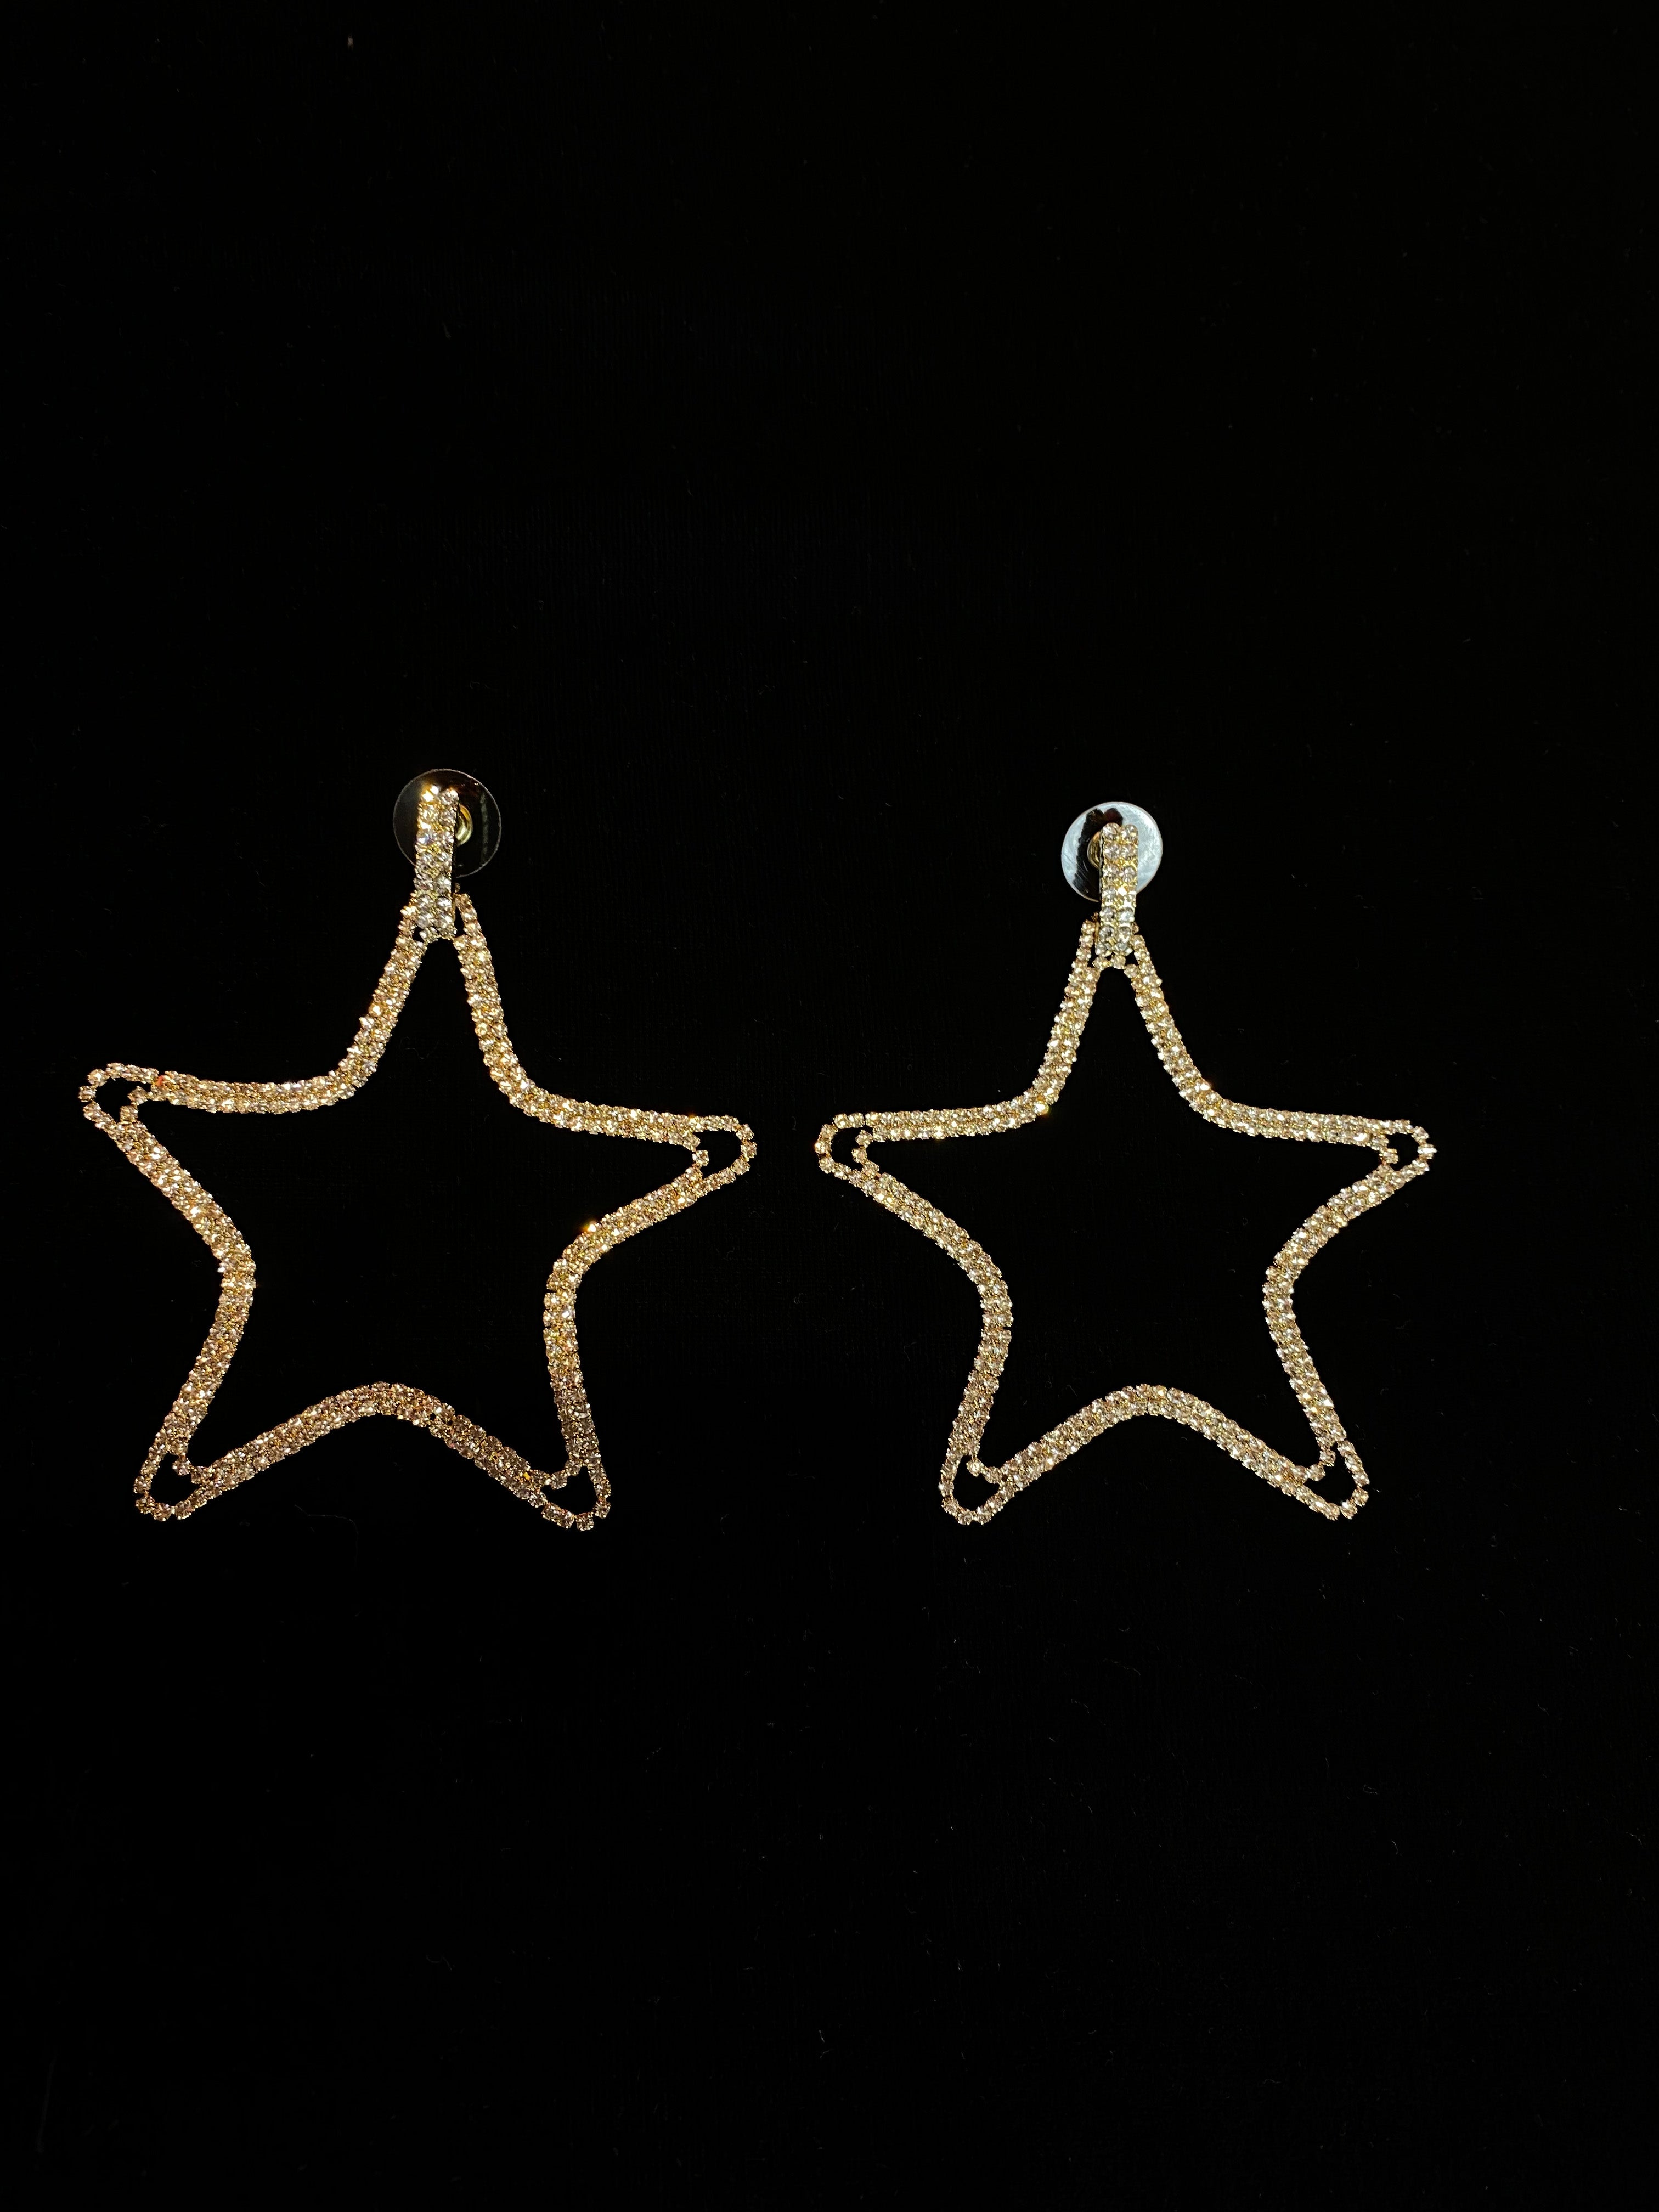 Star-shaped brilliant earrings